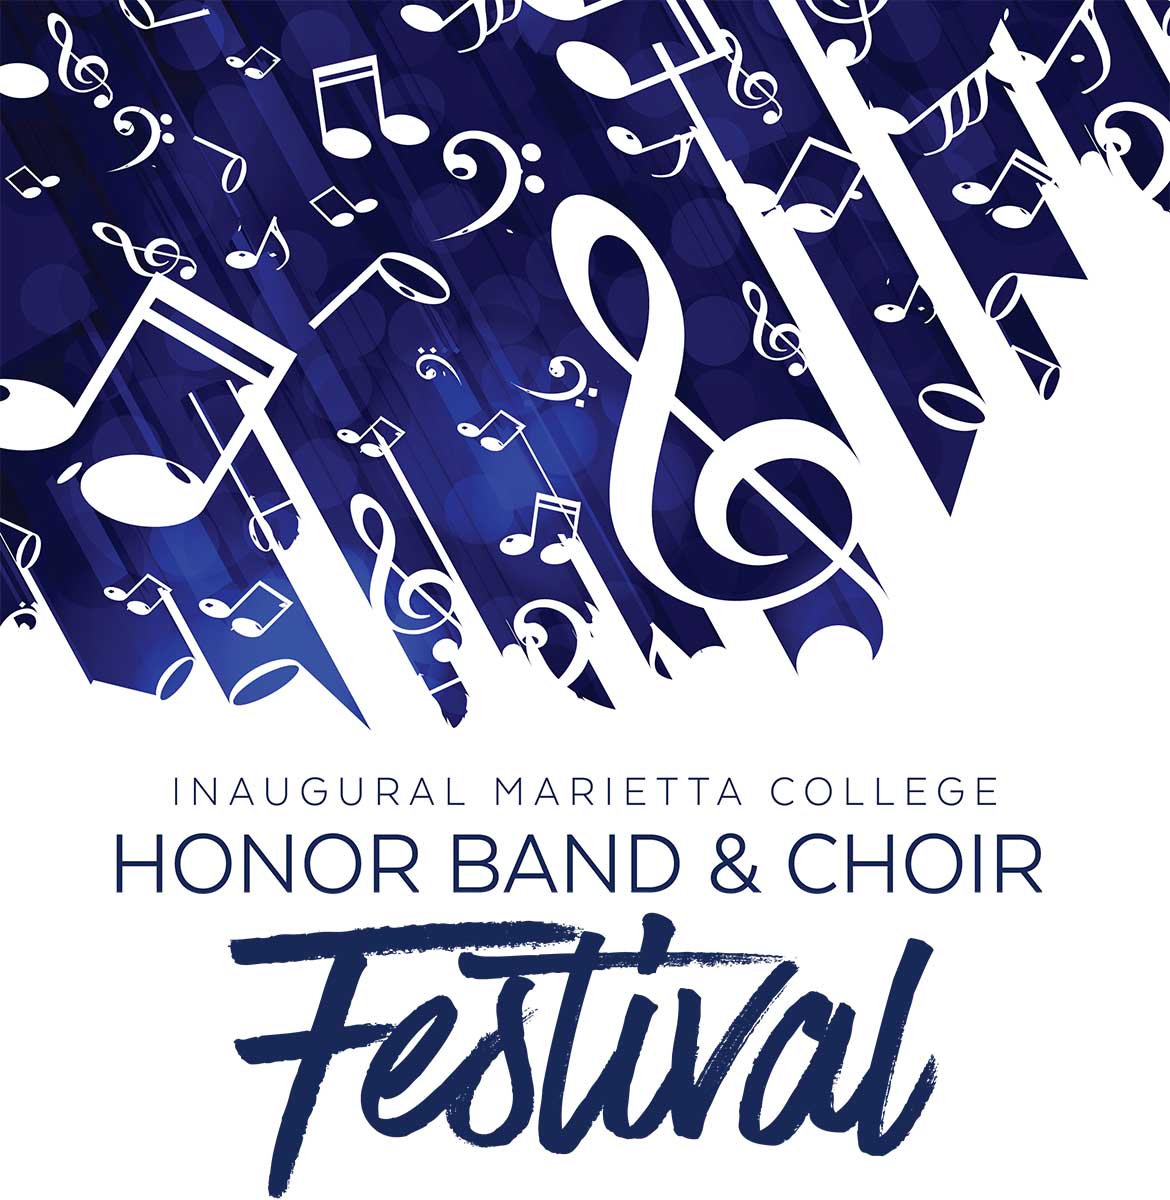 Annual Honor Band and Choir Weekend